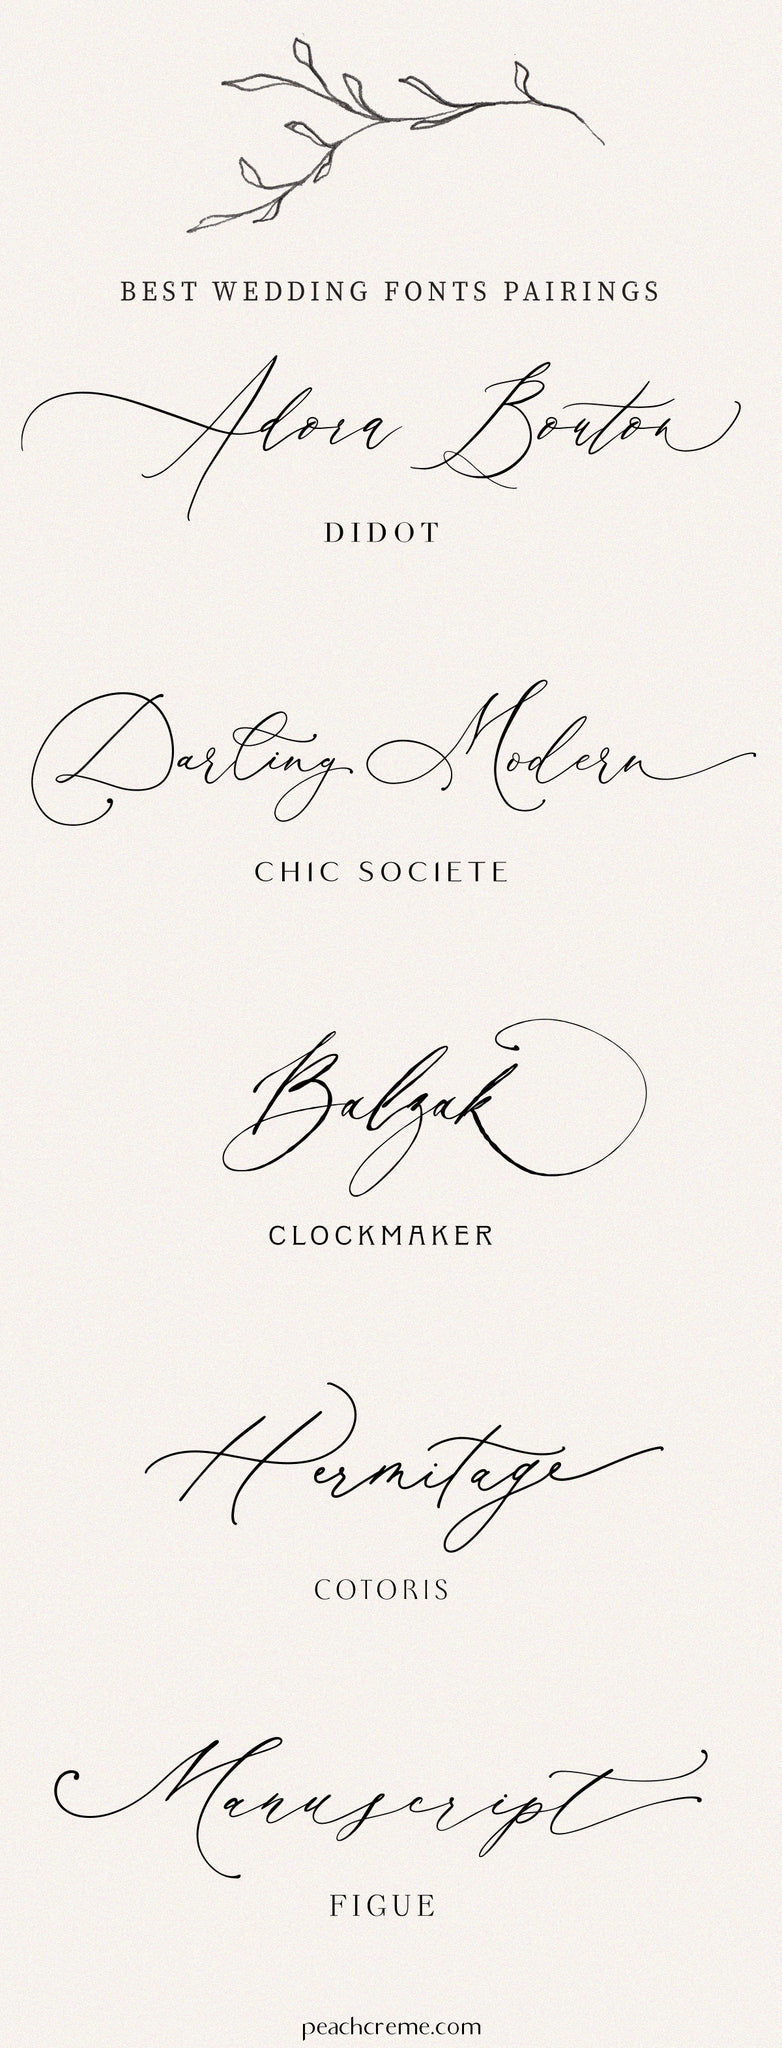 best wedding font pairings